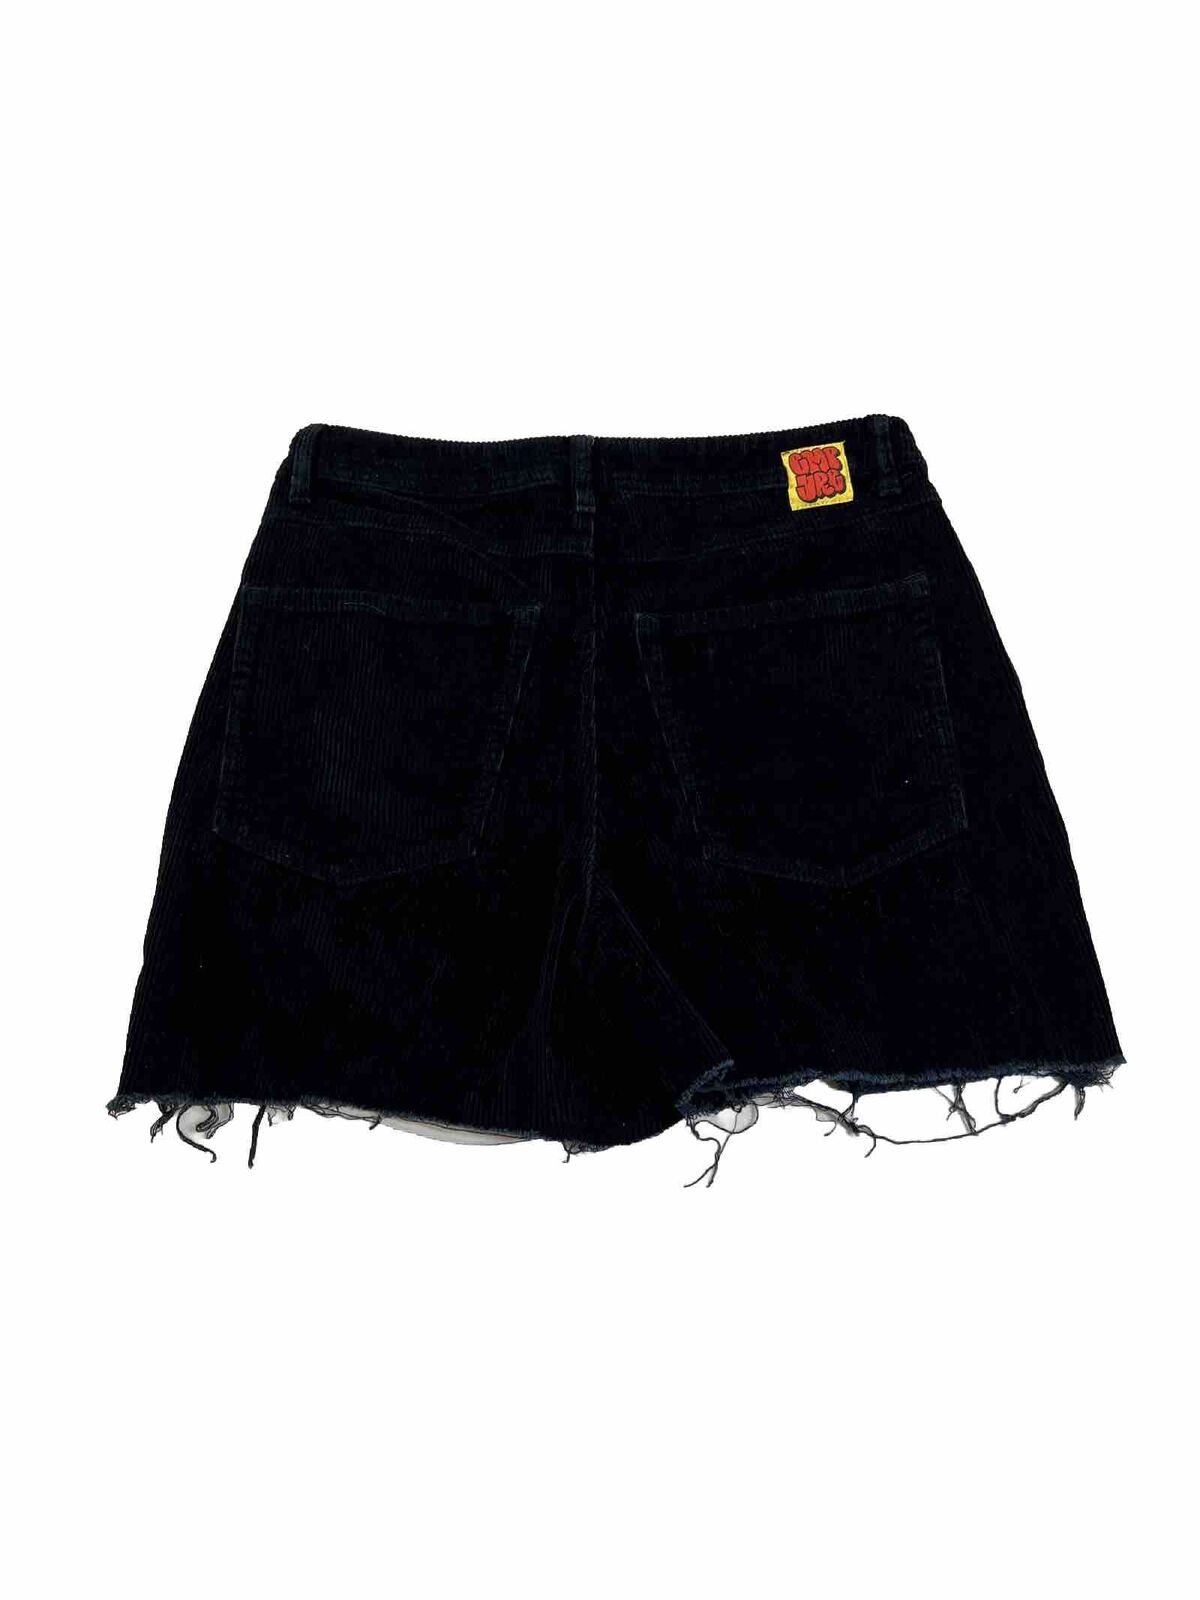 Empyre Women's Black Corduroy High Rise Shorts - 30